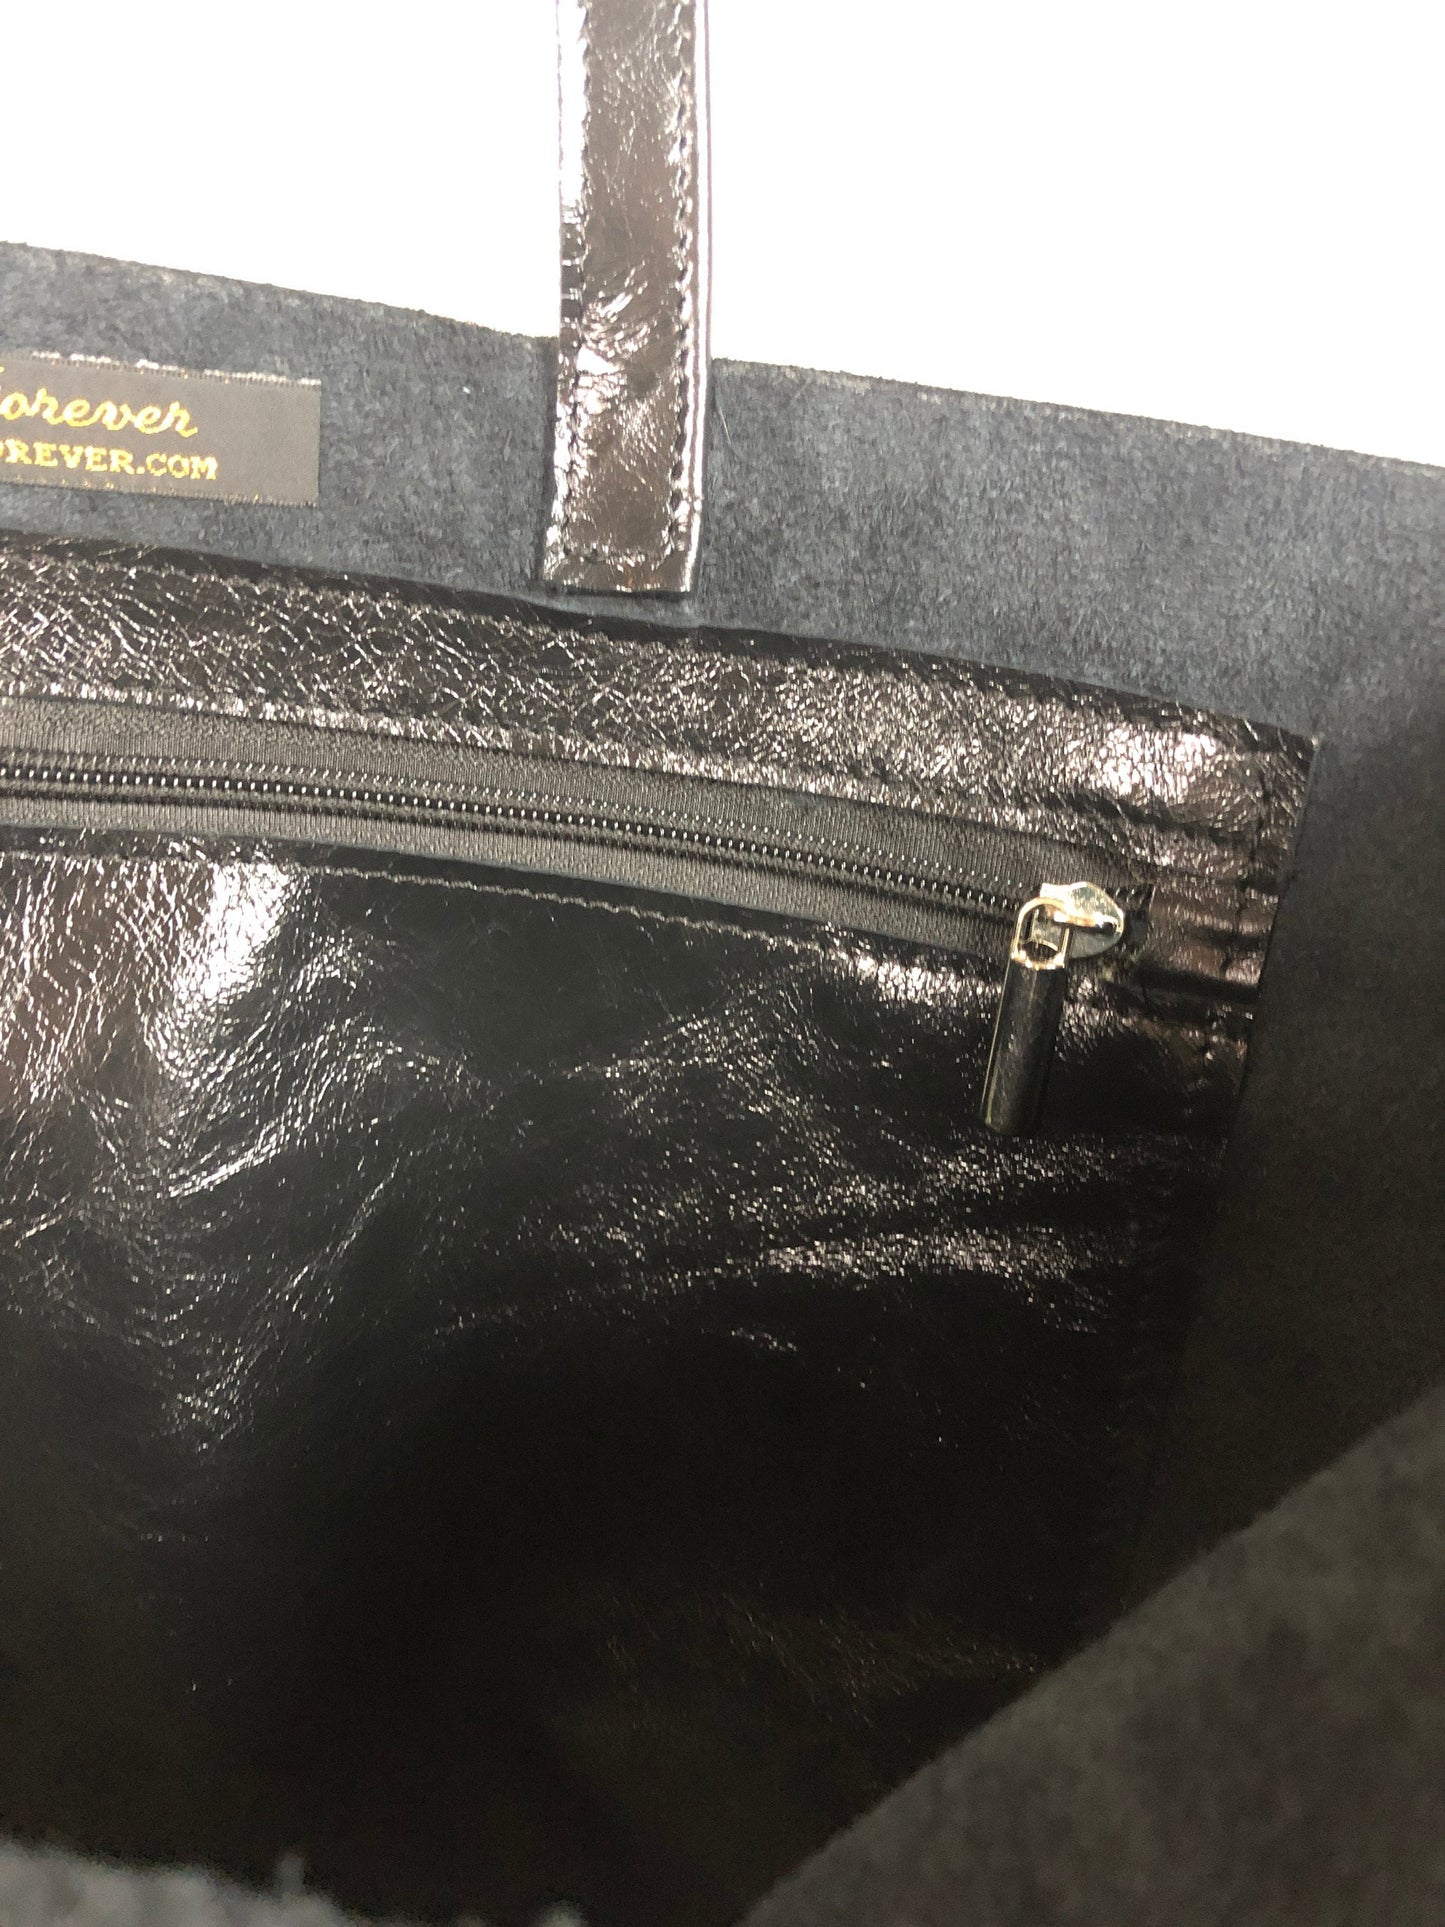 Black leather tote, oversized Italian leather tote, boho bag, large slouchy tote, soft leather bag, large soft shoulder bag